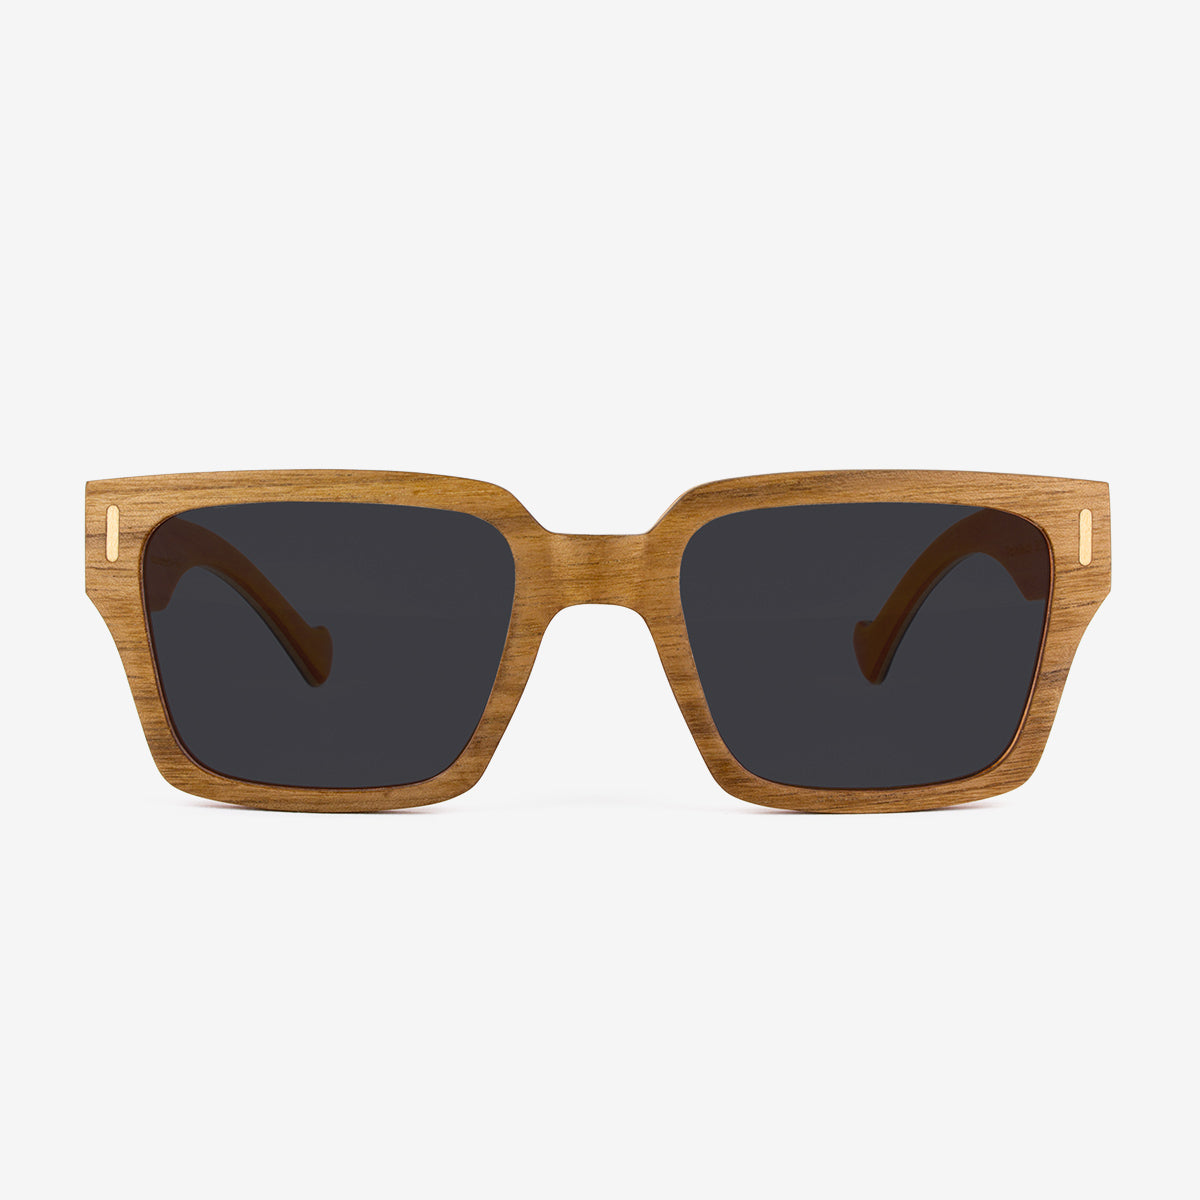 Palm Beach - Wood Sunglasses Black Walnut